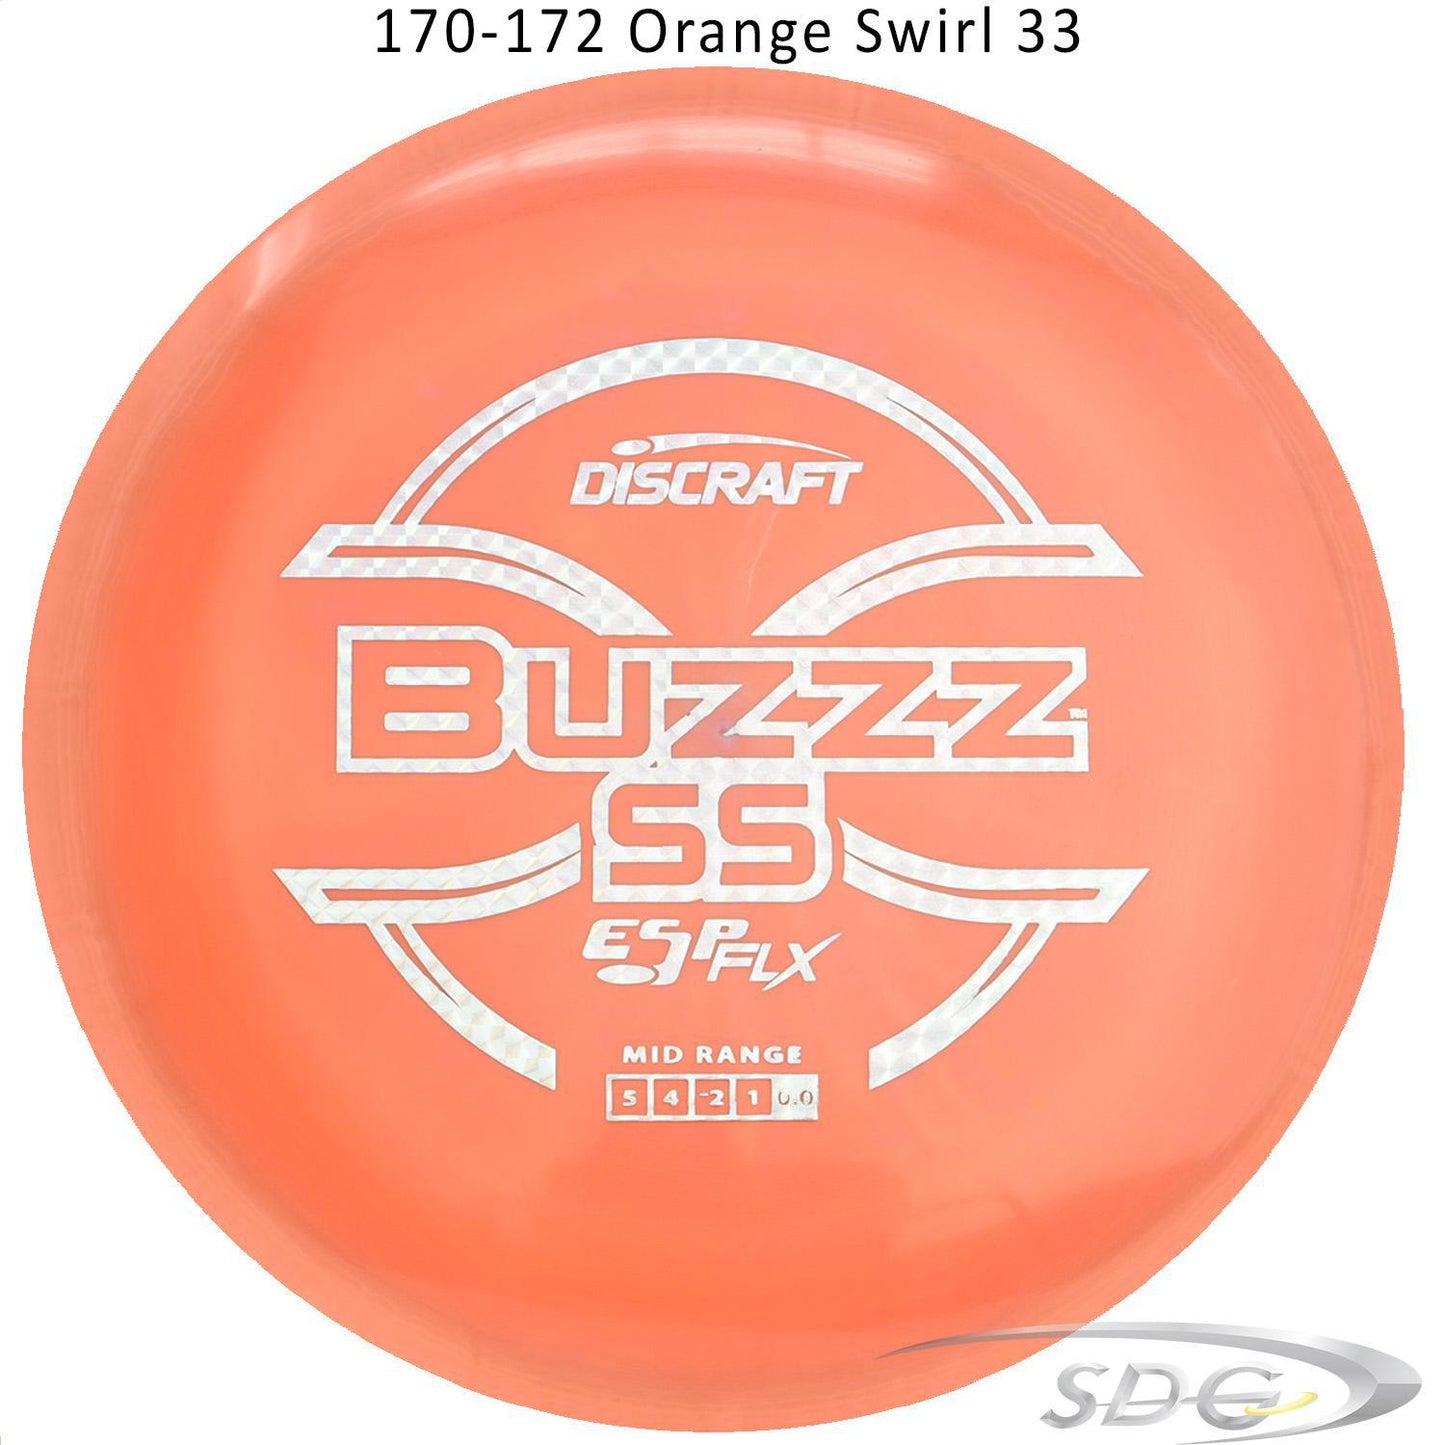 discraft-esp-flx-buzzz-ss-disc-golf-mid-range 170-172 Orange Swirl 33